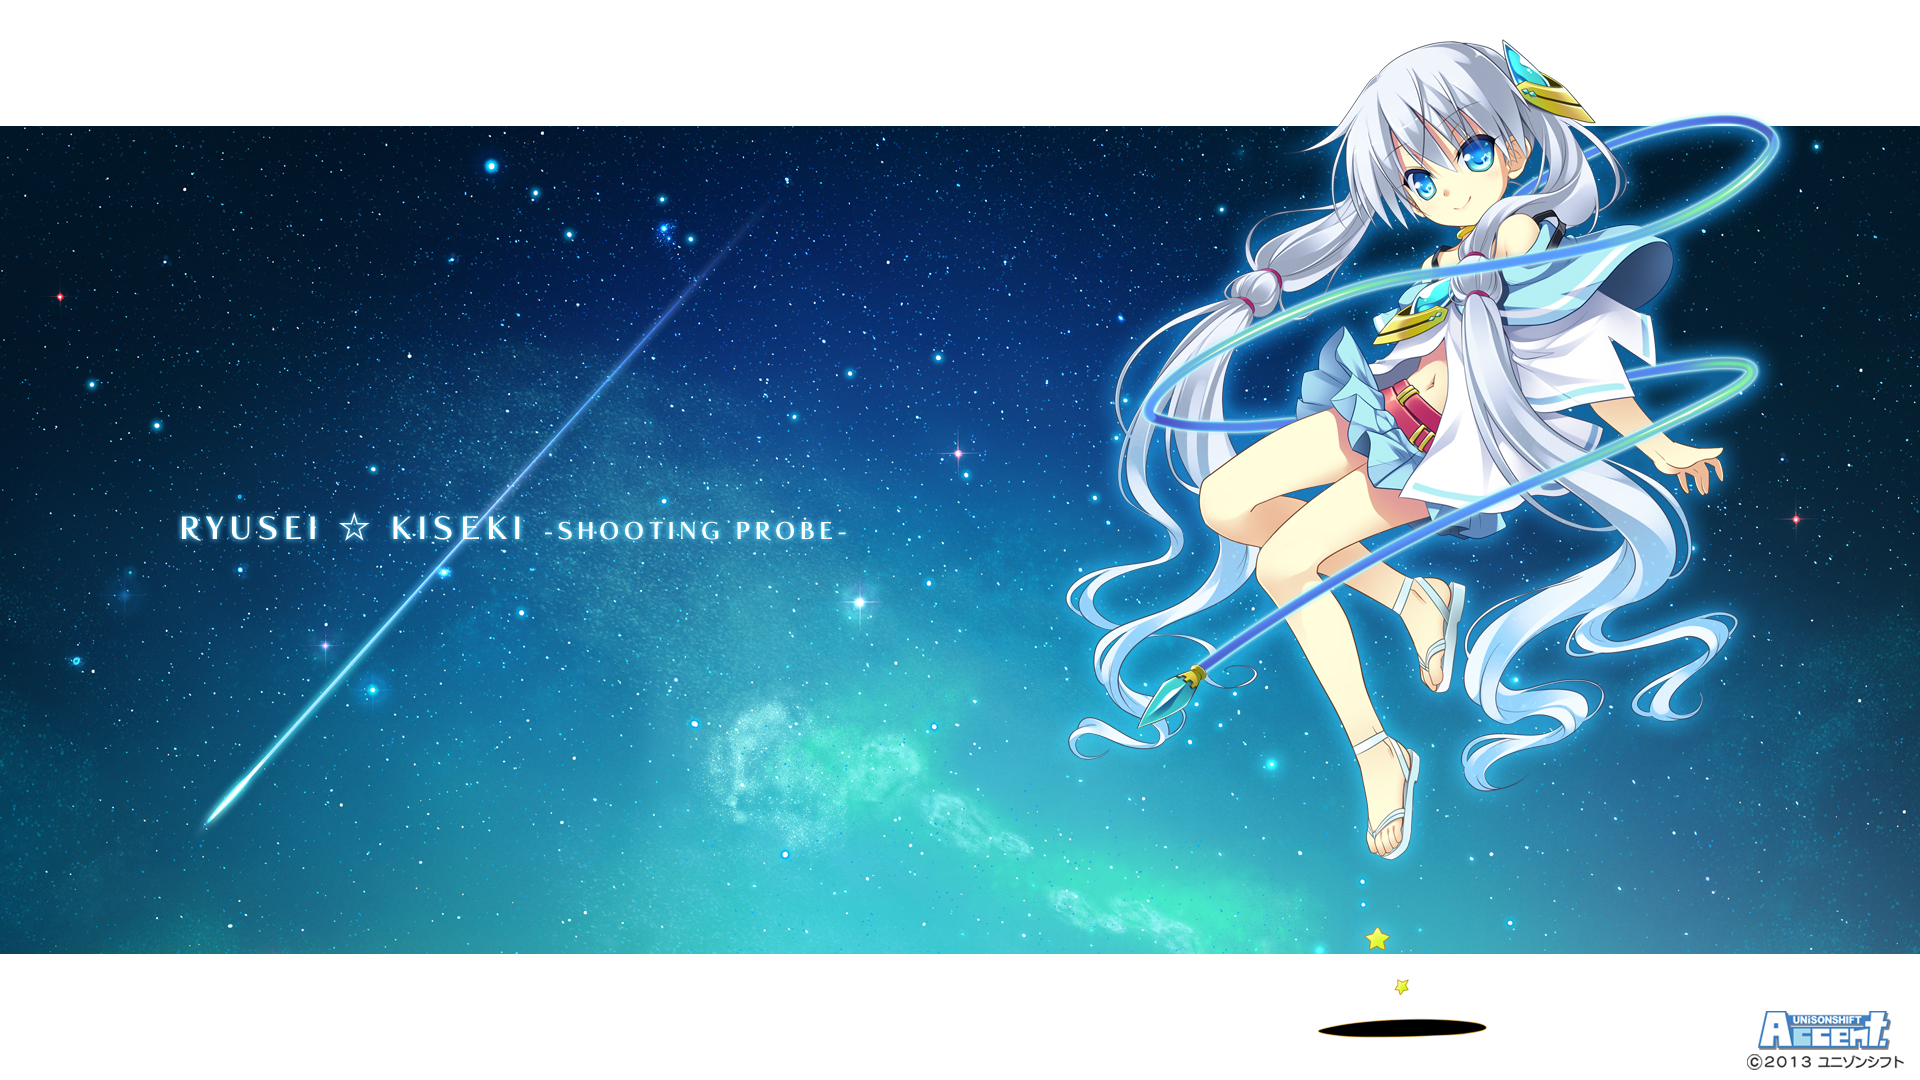 845449 descargar imagen animado, ryuusei☆kiseki sonda de tiro, jovencito (ryuusei☆kiseki): fondos de pantalla y protectores de pantalla gratis